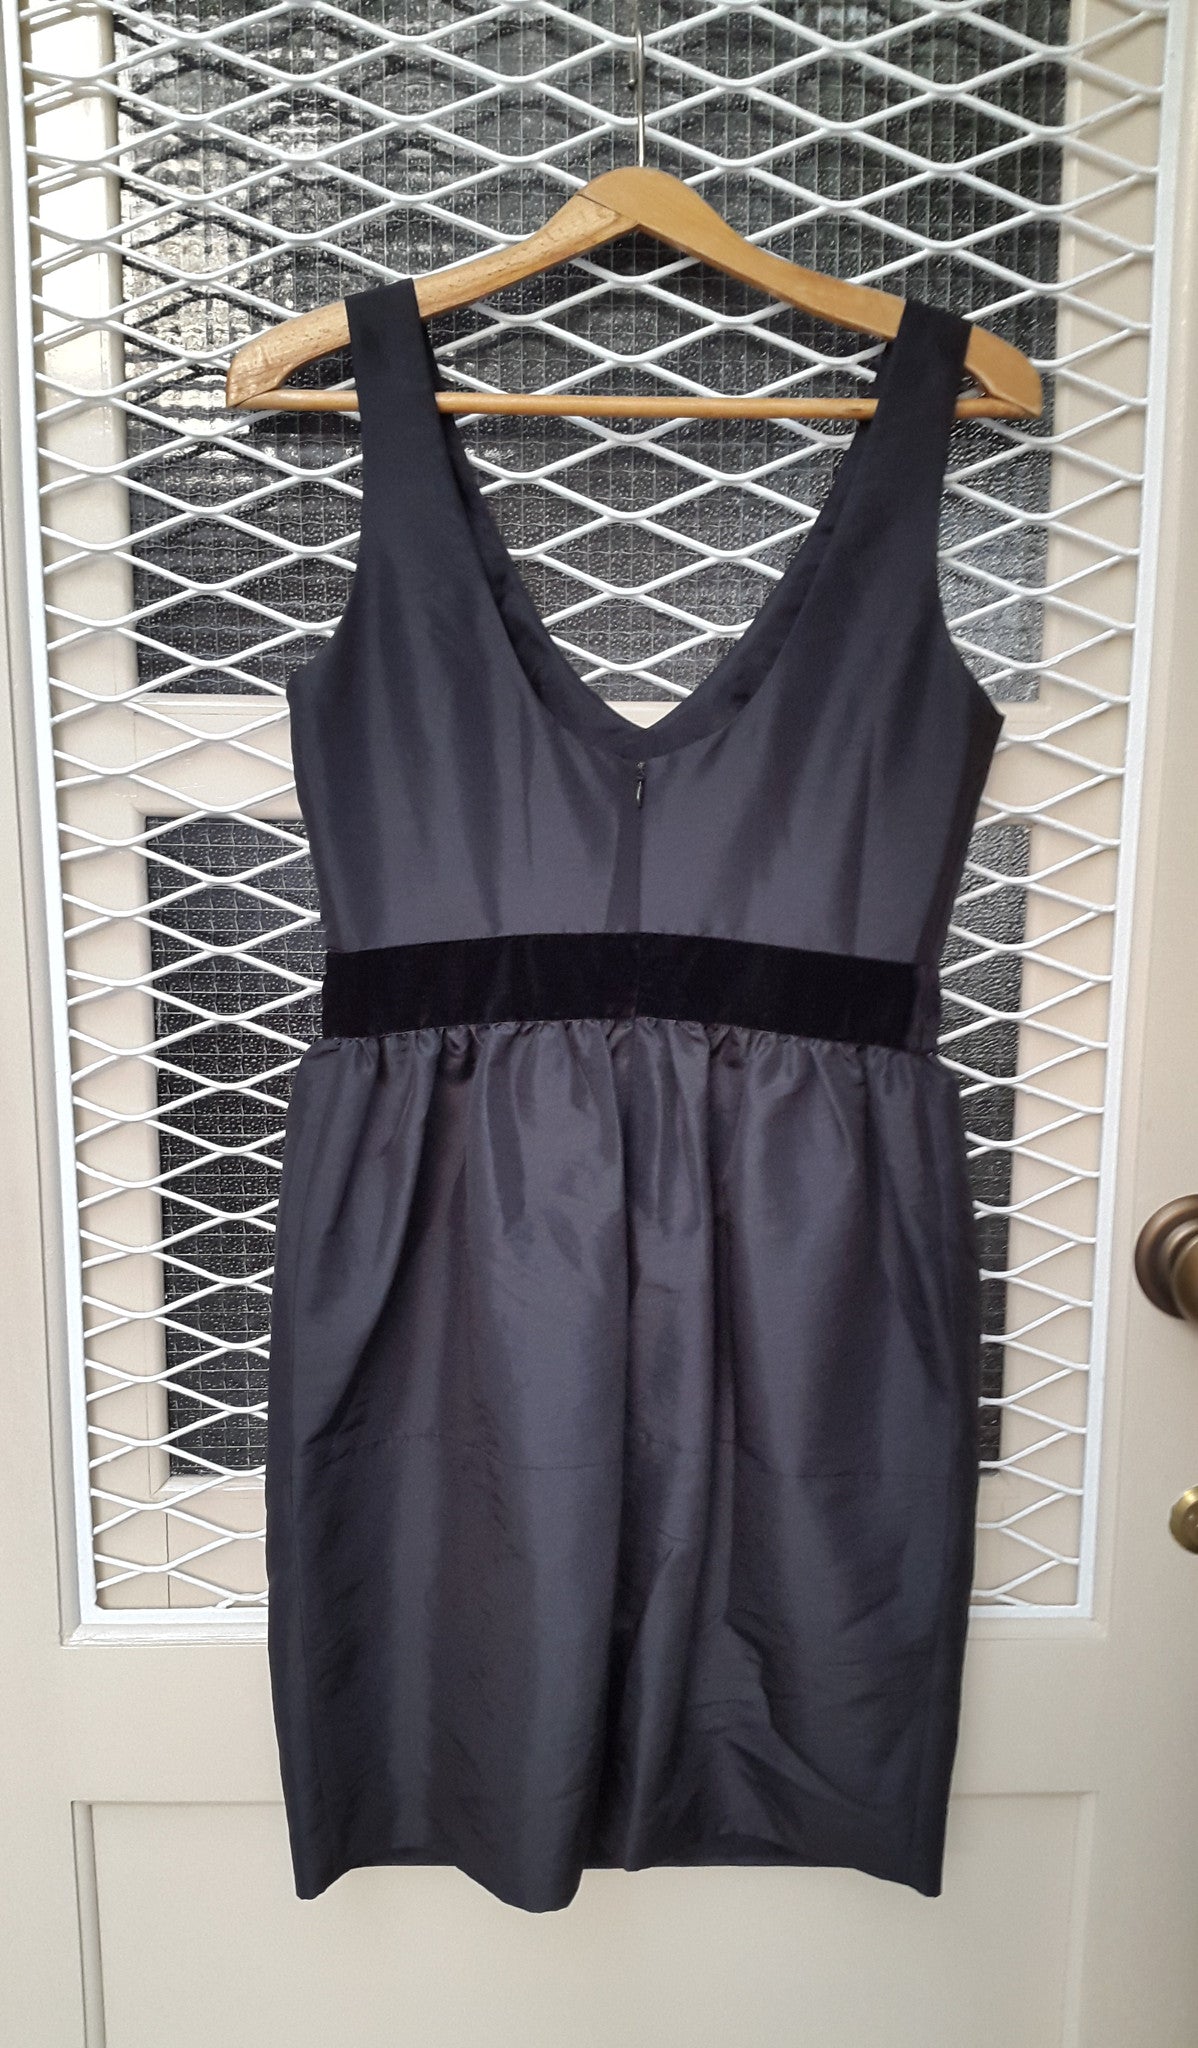 Black 60s Inspired Cocktail Dress